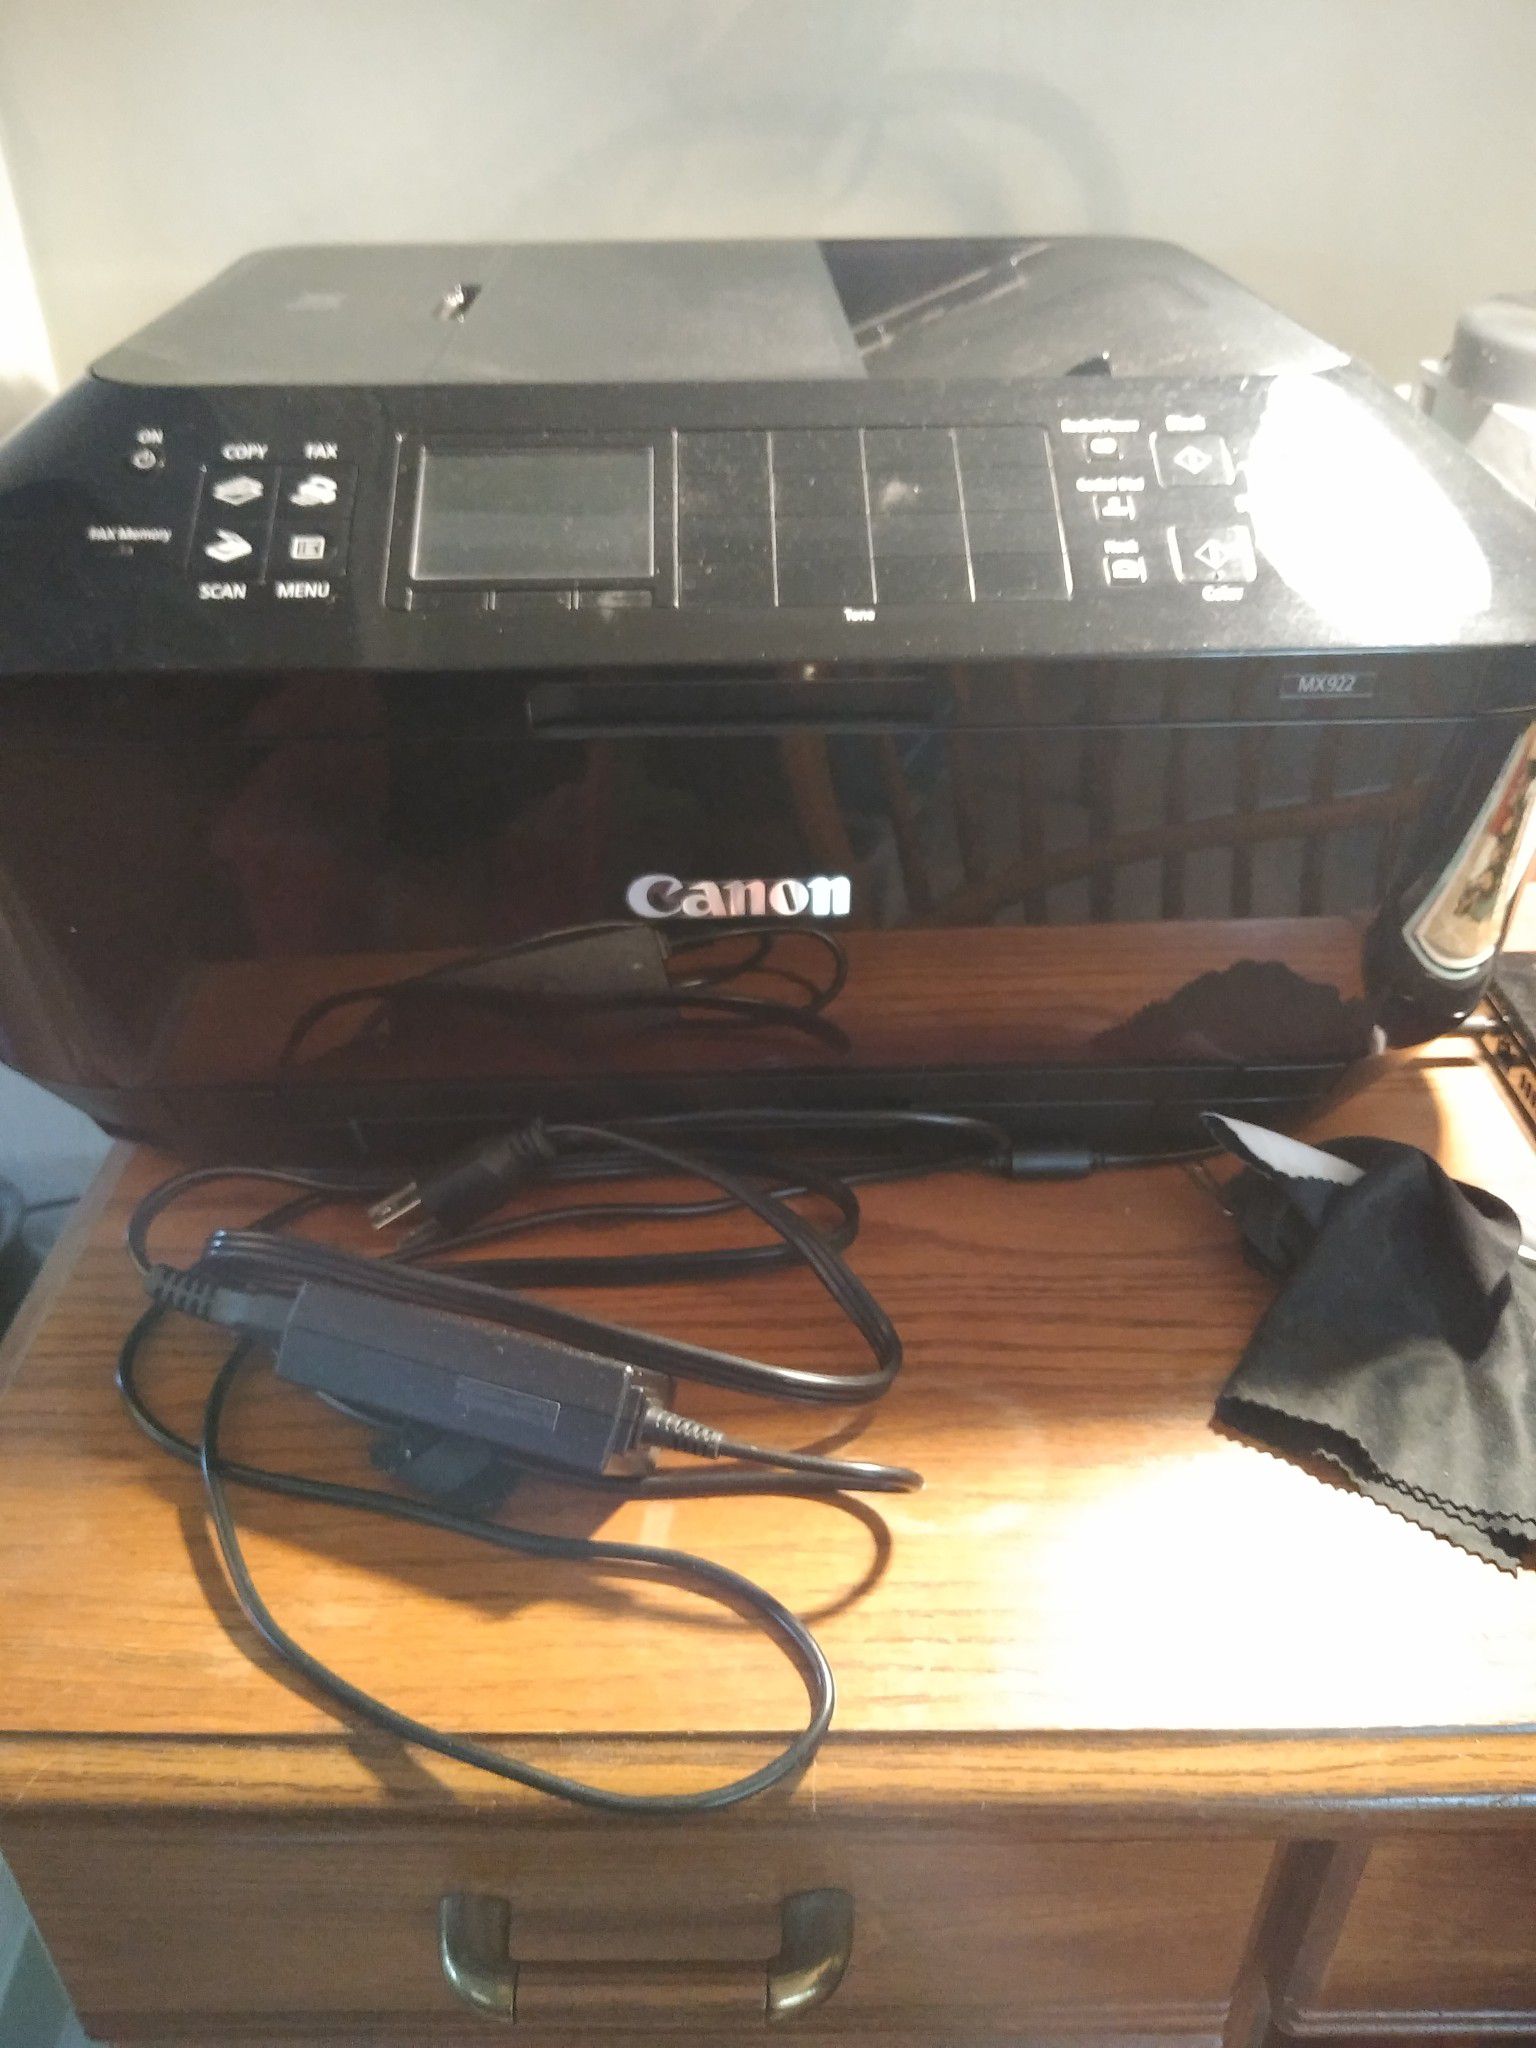 Canon - Printer/Scanner (PIXMA mx922)